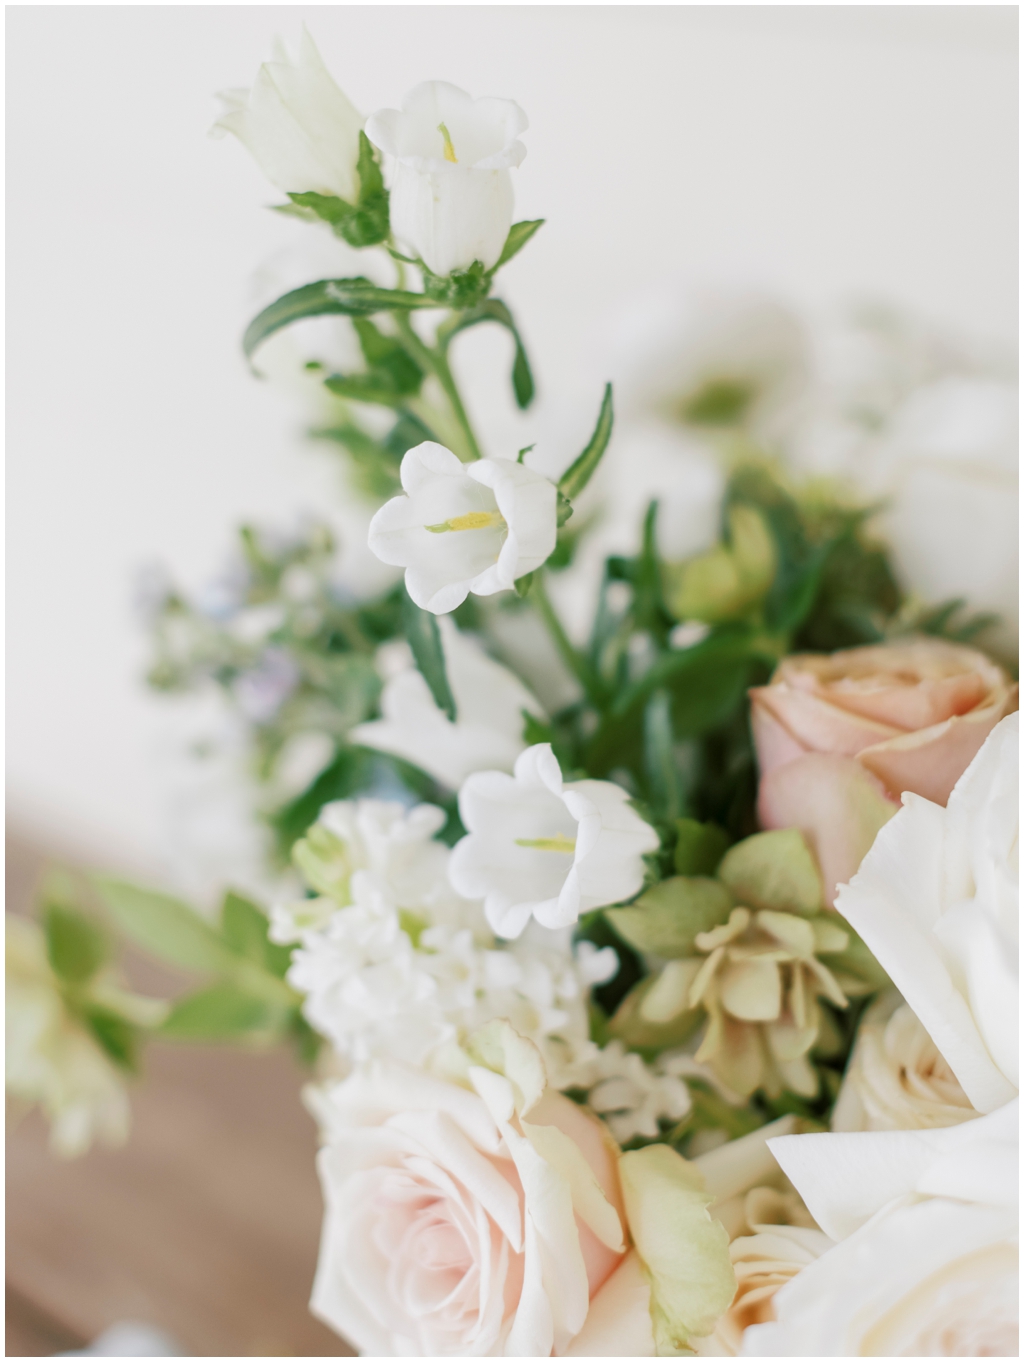 Up close shot of charming bridal bouquet